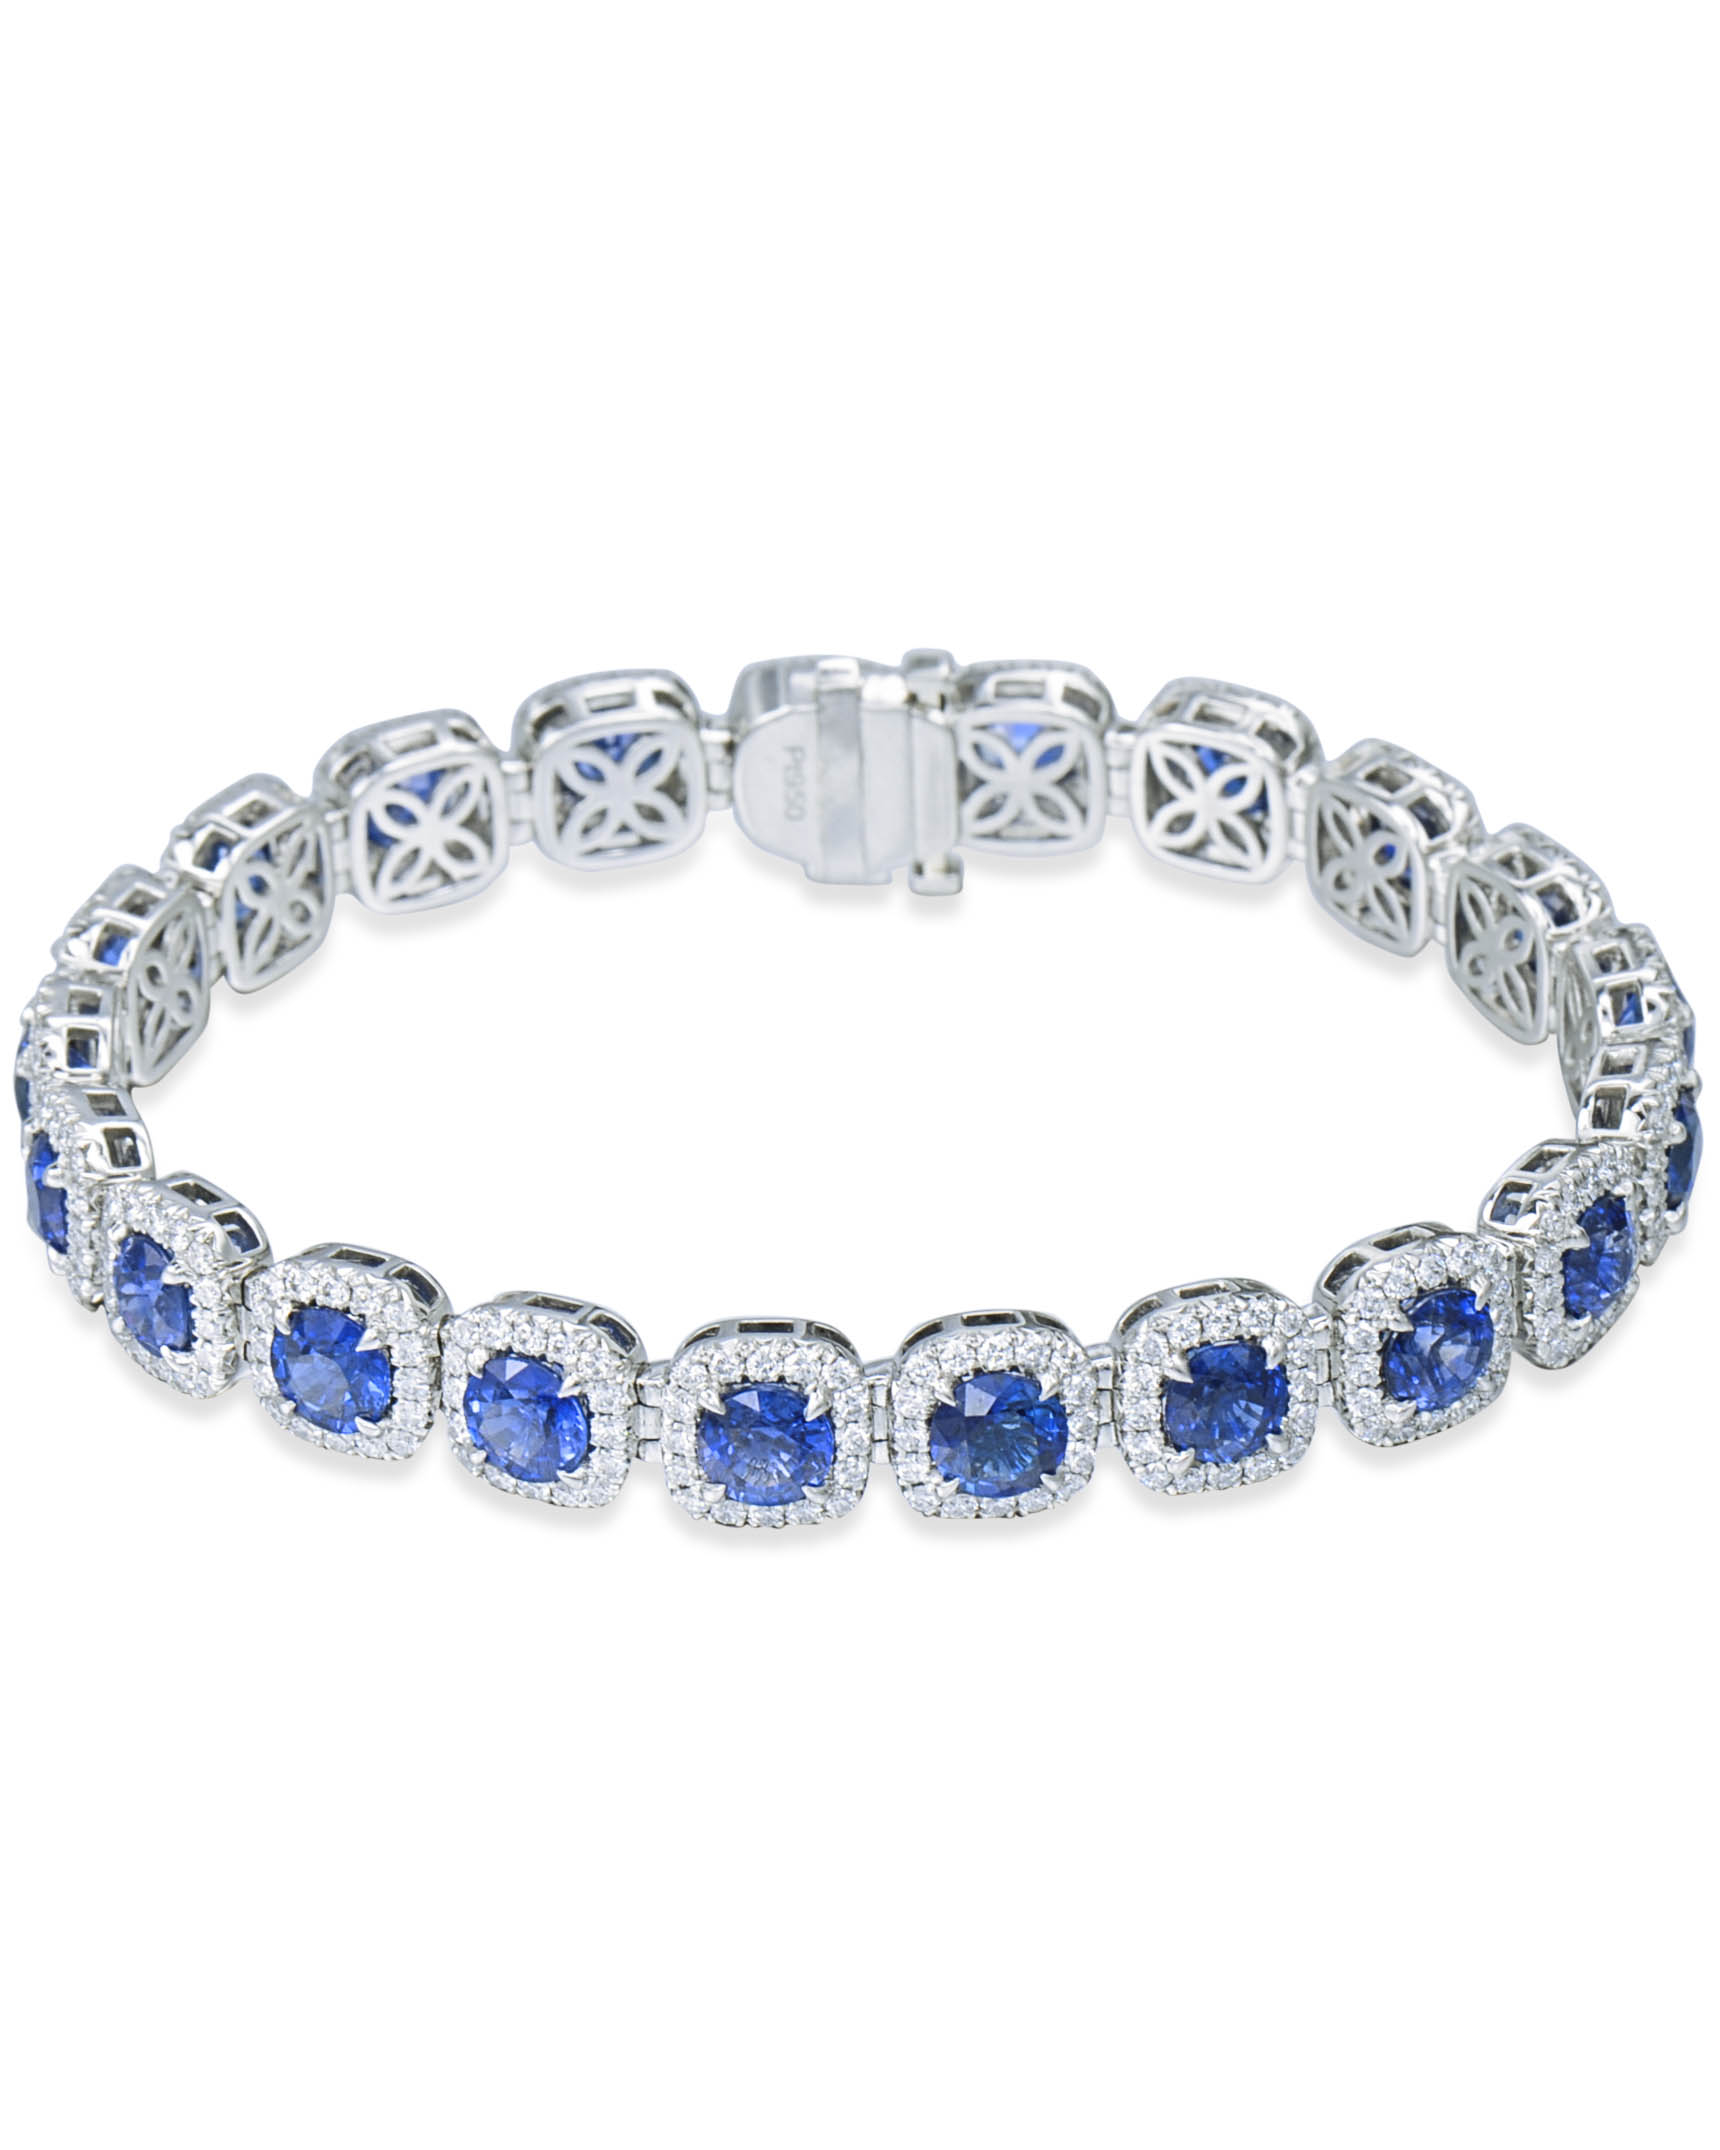 Blue Sapphire Tennis Bracelet in 14k White Gold by Effy - Jewelry By Designs